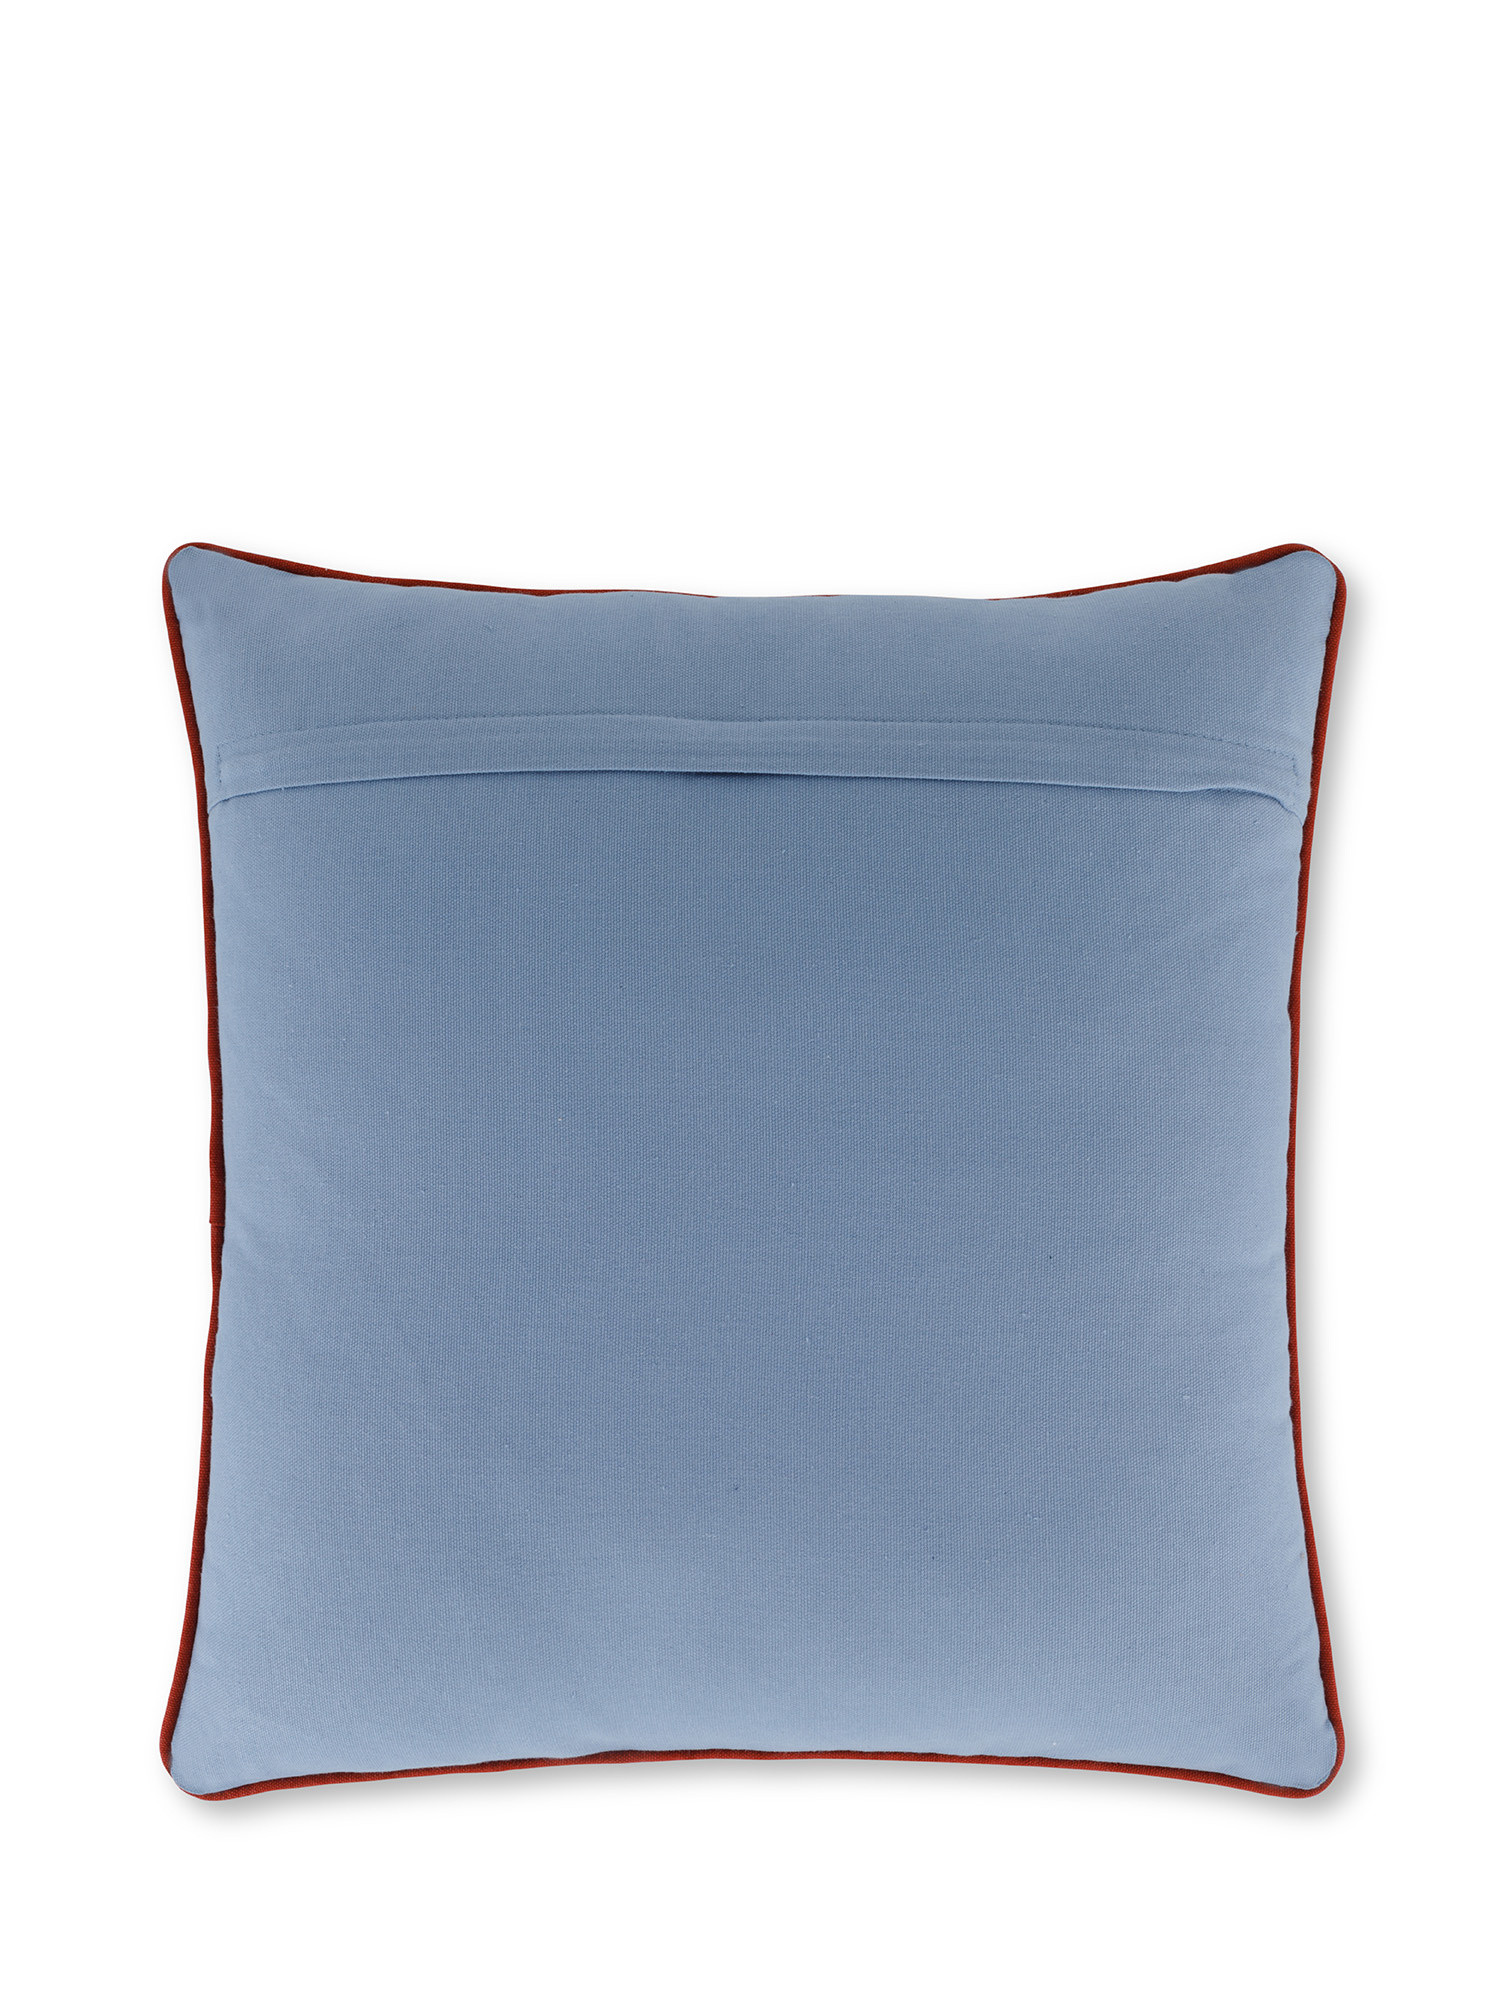 Cuscino con margherite ricamate in rilievo 45x45 cm, Azzurro, large image number 1